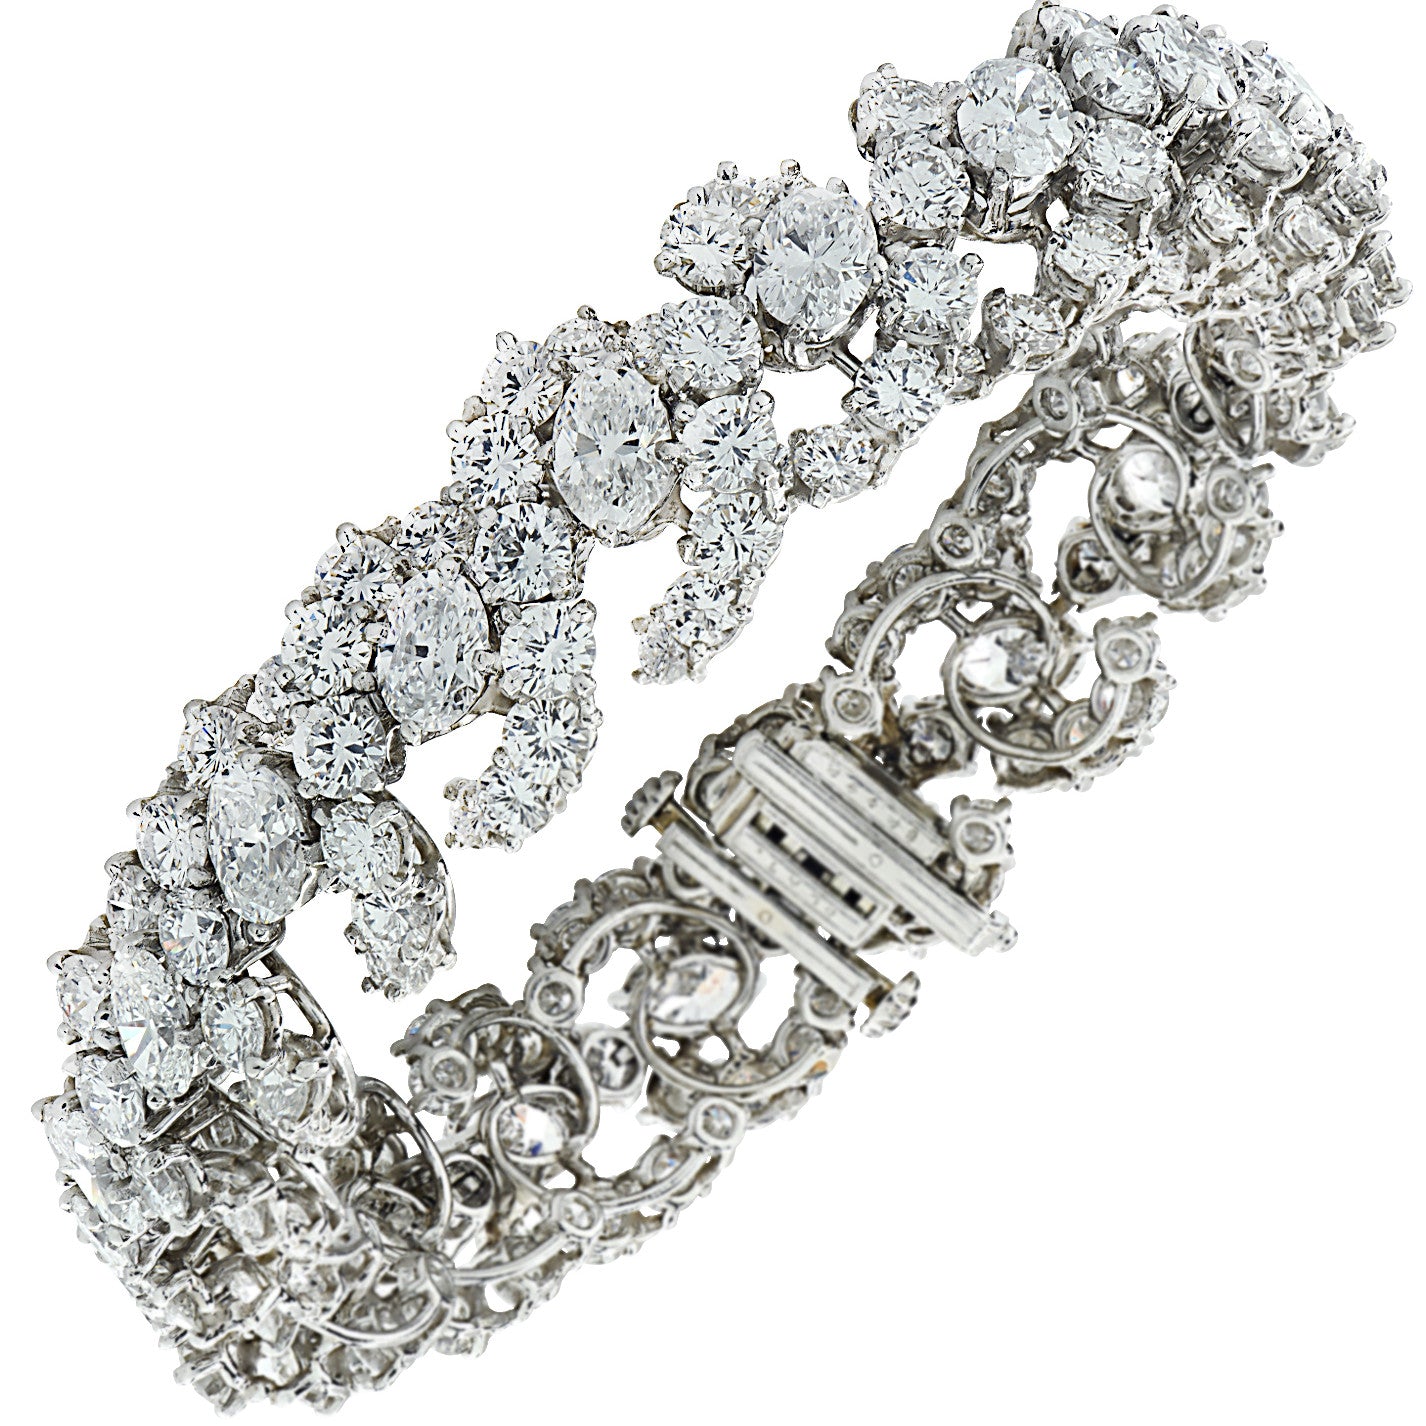 Oscar Heyman 1960s Platinum Diamond Bracelet front view showing clasp